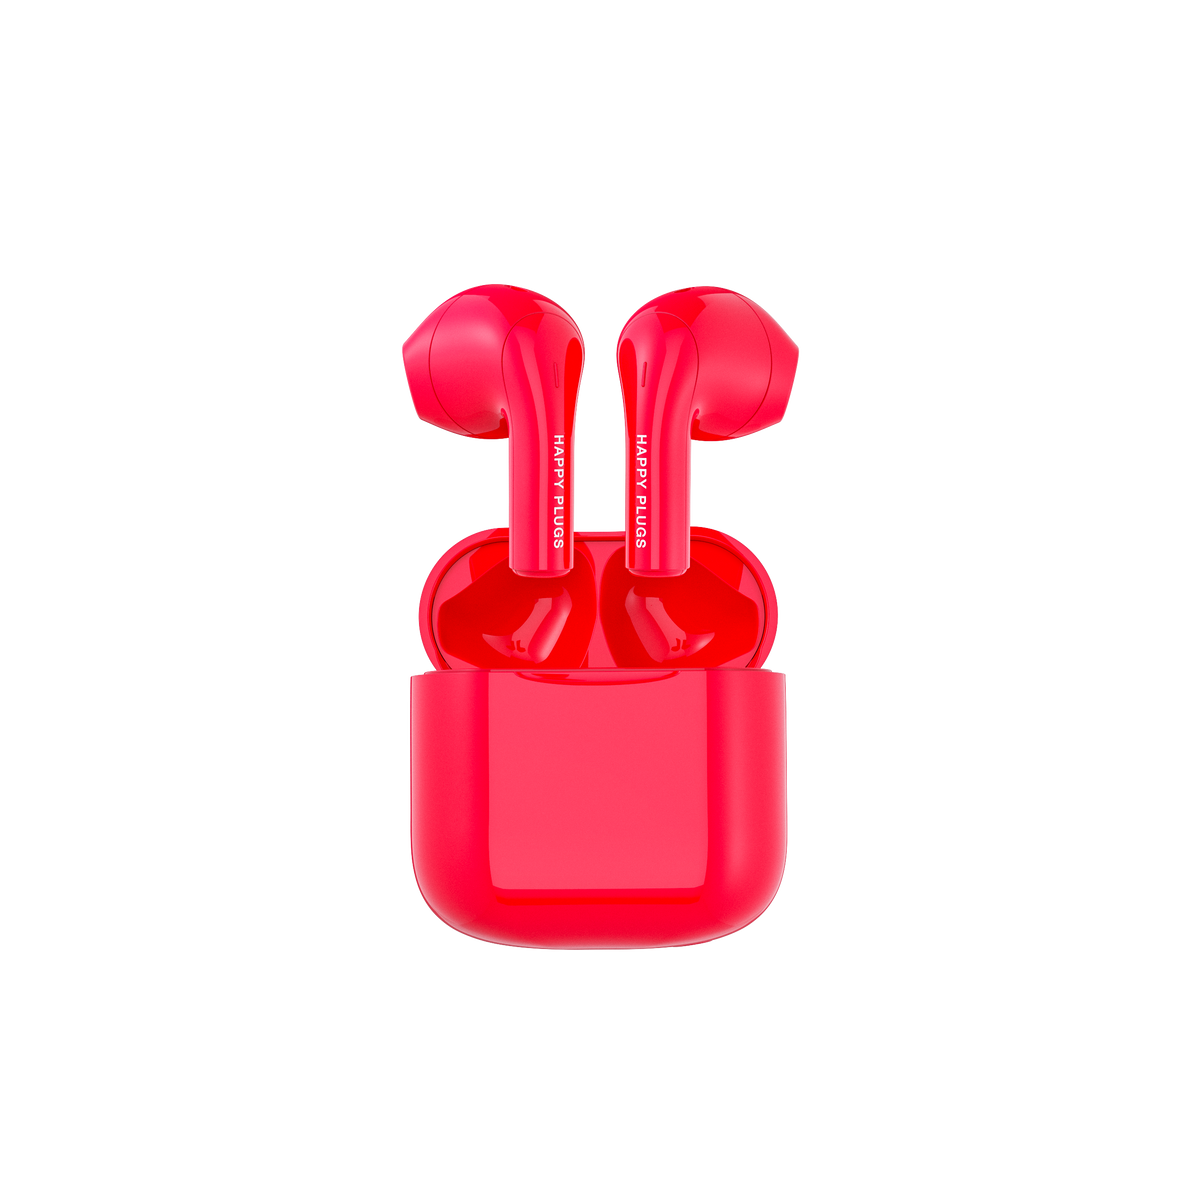 HAPPY PLUGS Joy True Wireless Headphones - Red